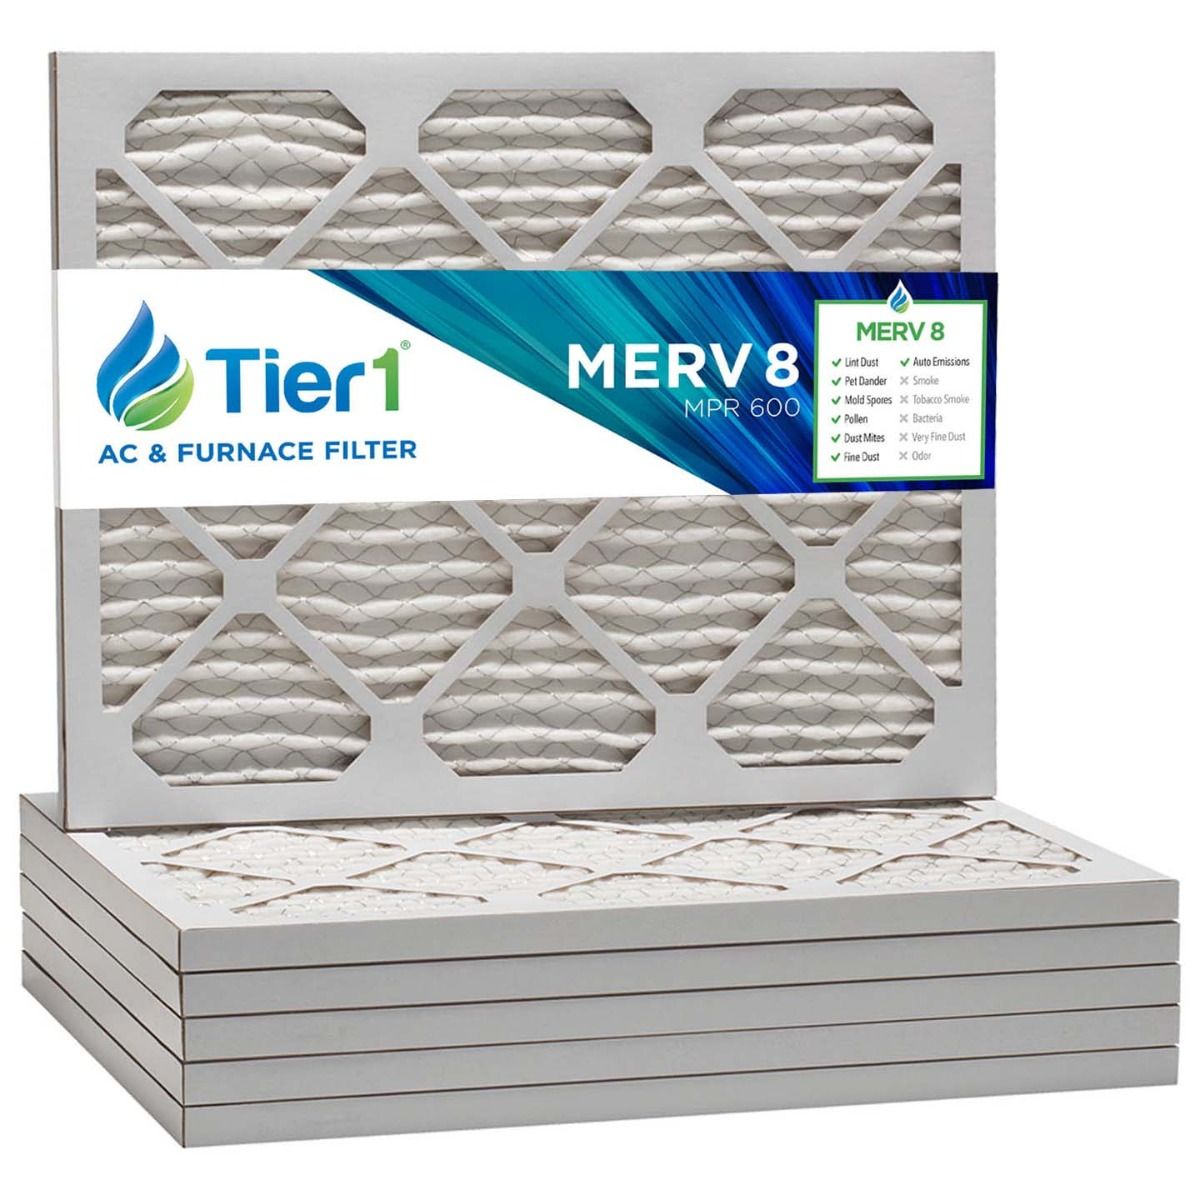 16x20x1 Merv 8 Universal Air Filter By Tier1